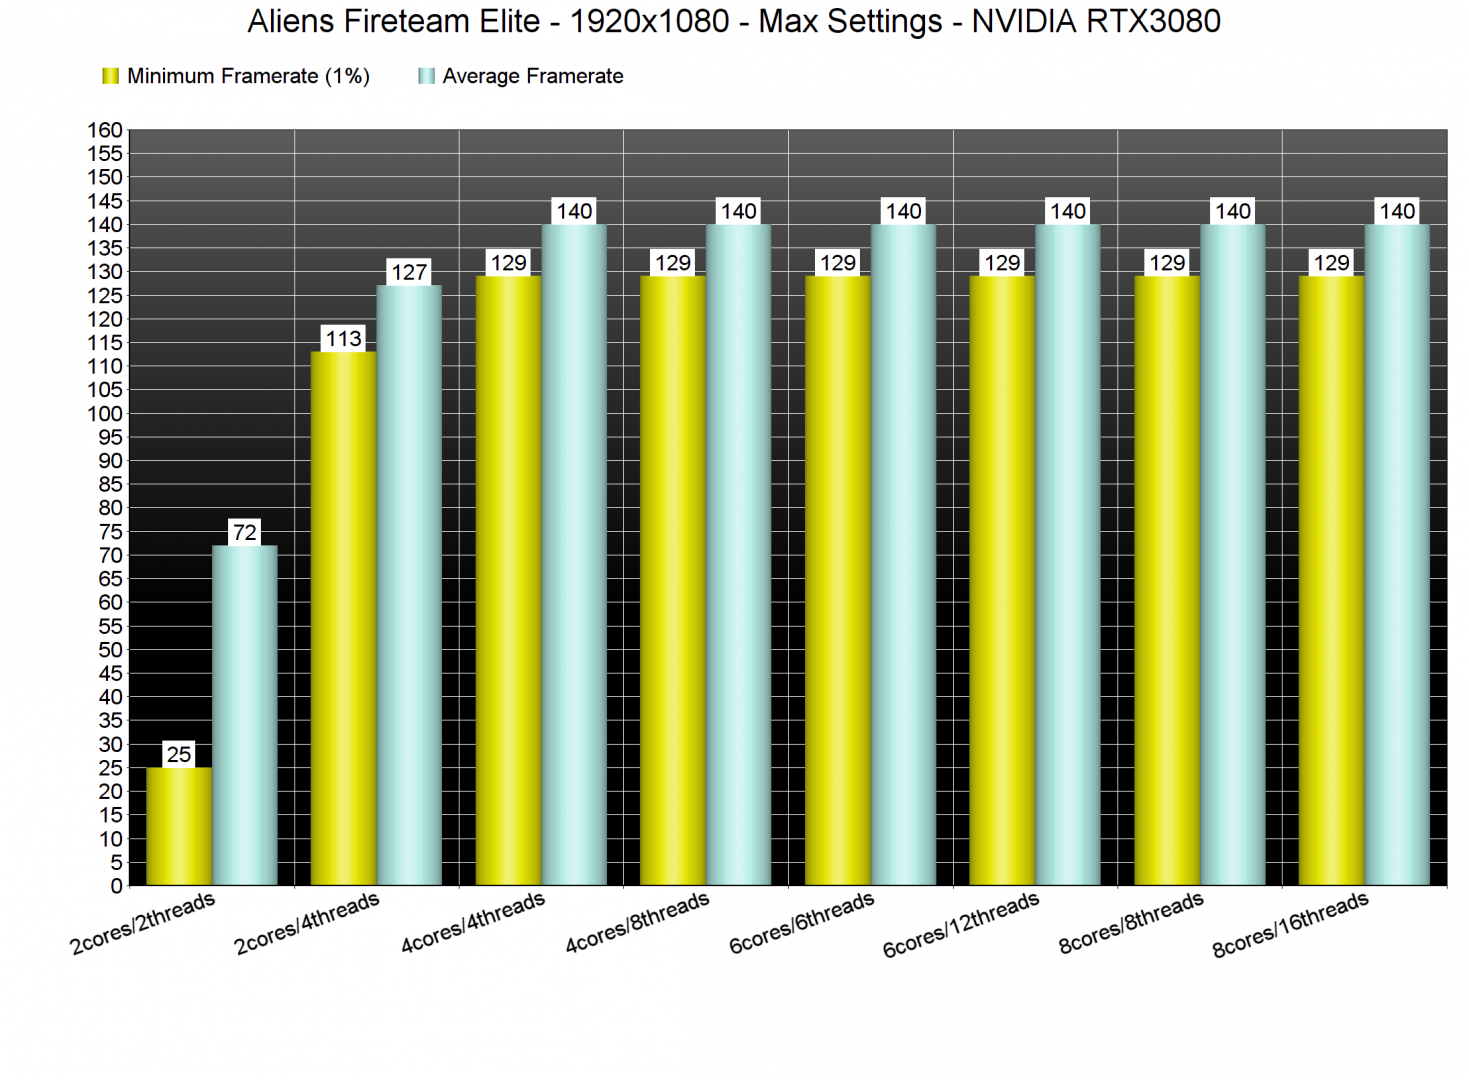 Aliens Fireteam Elite CPU benchmarks